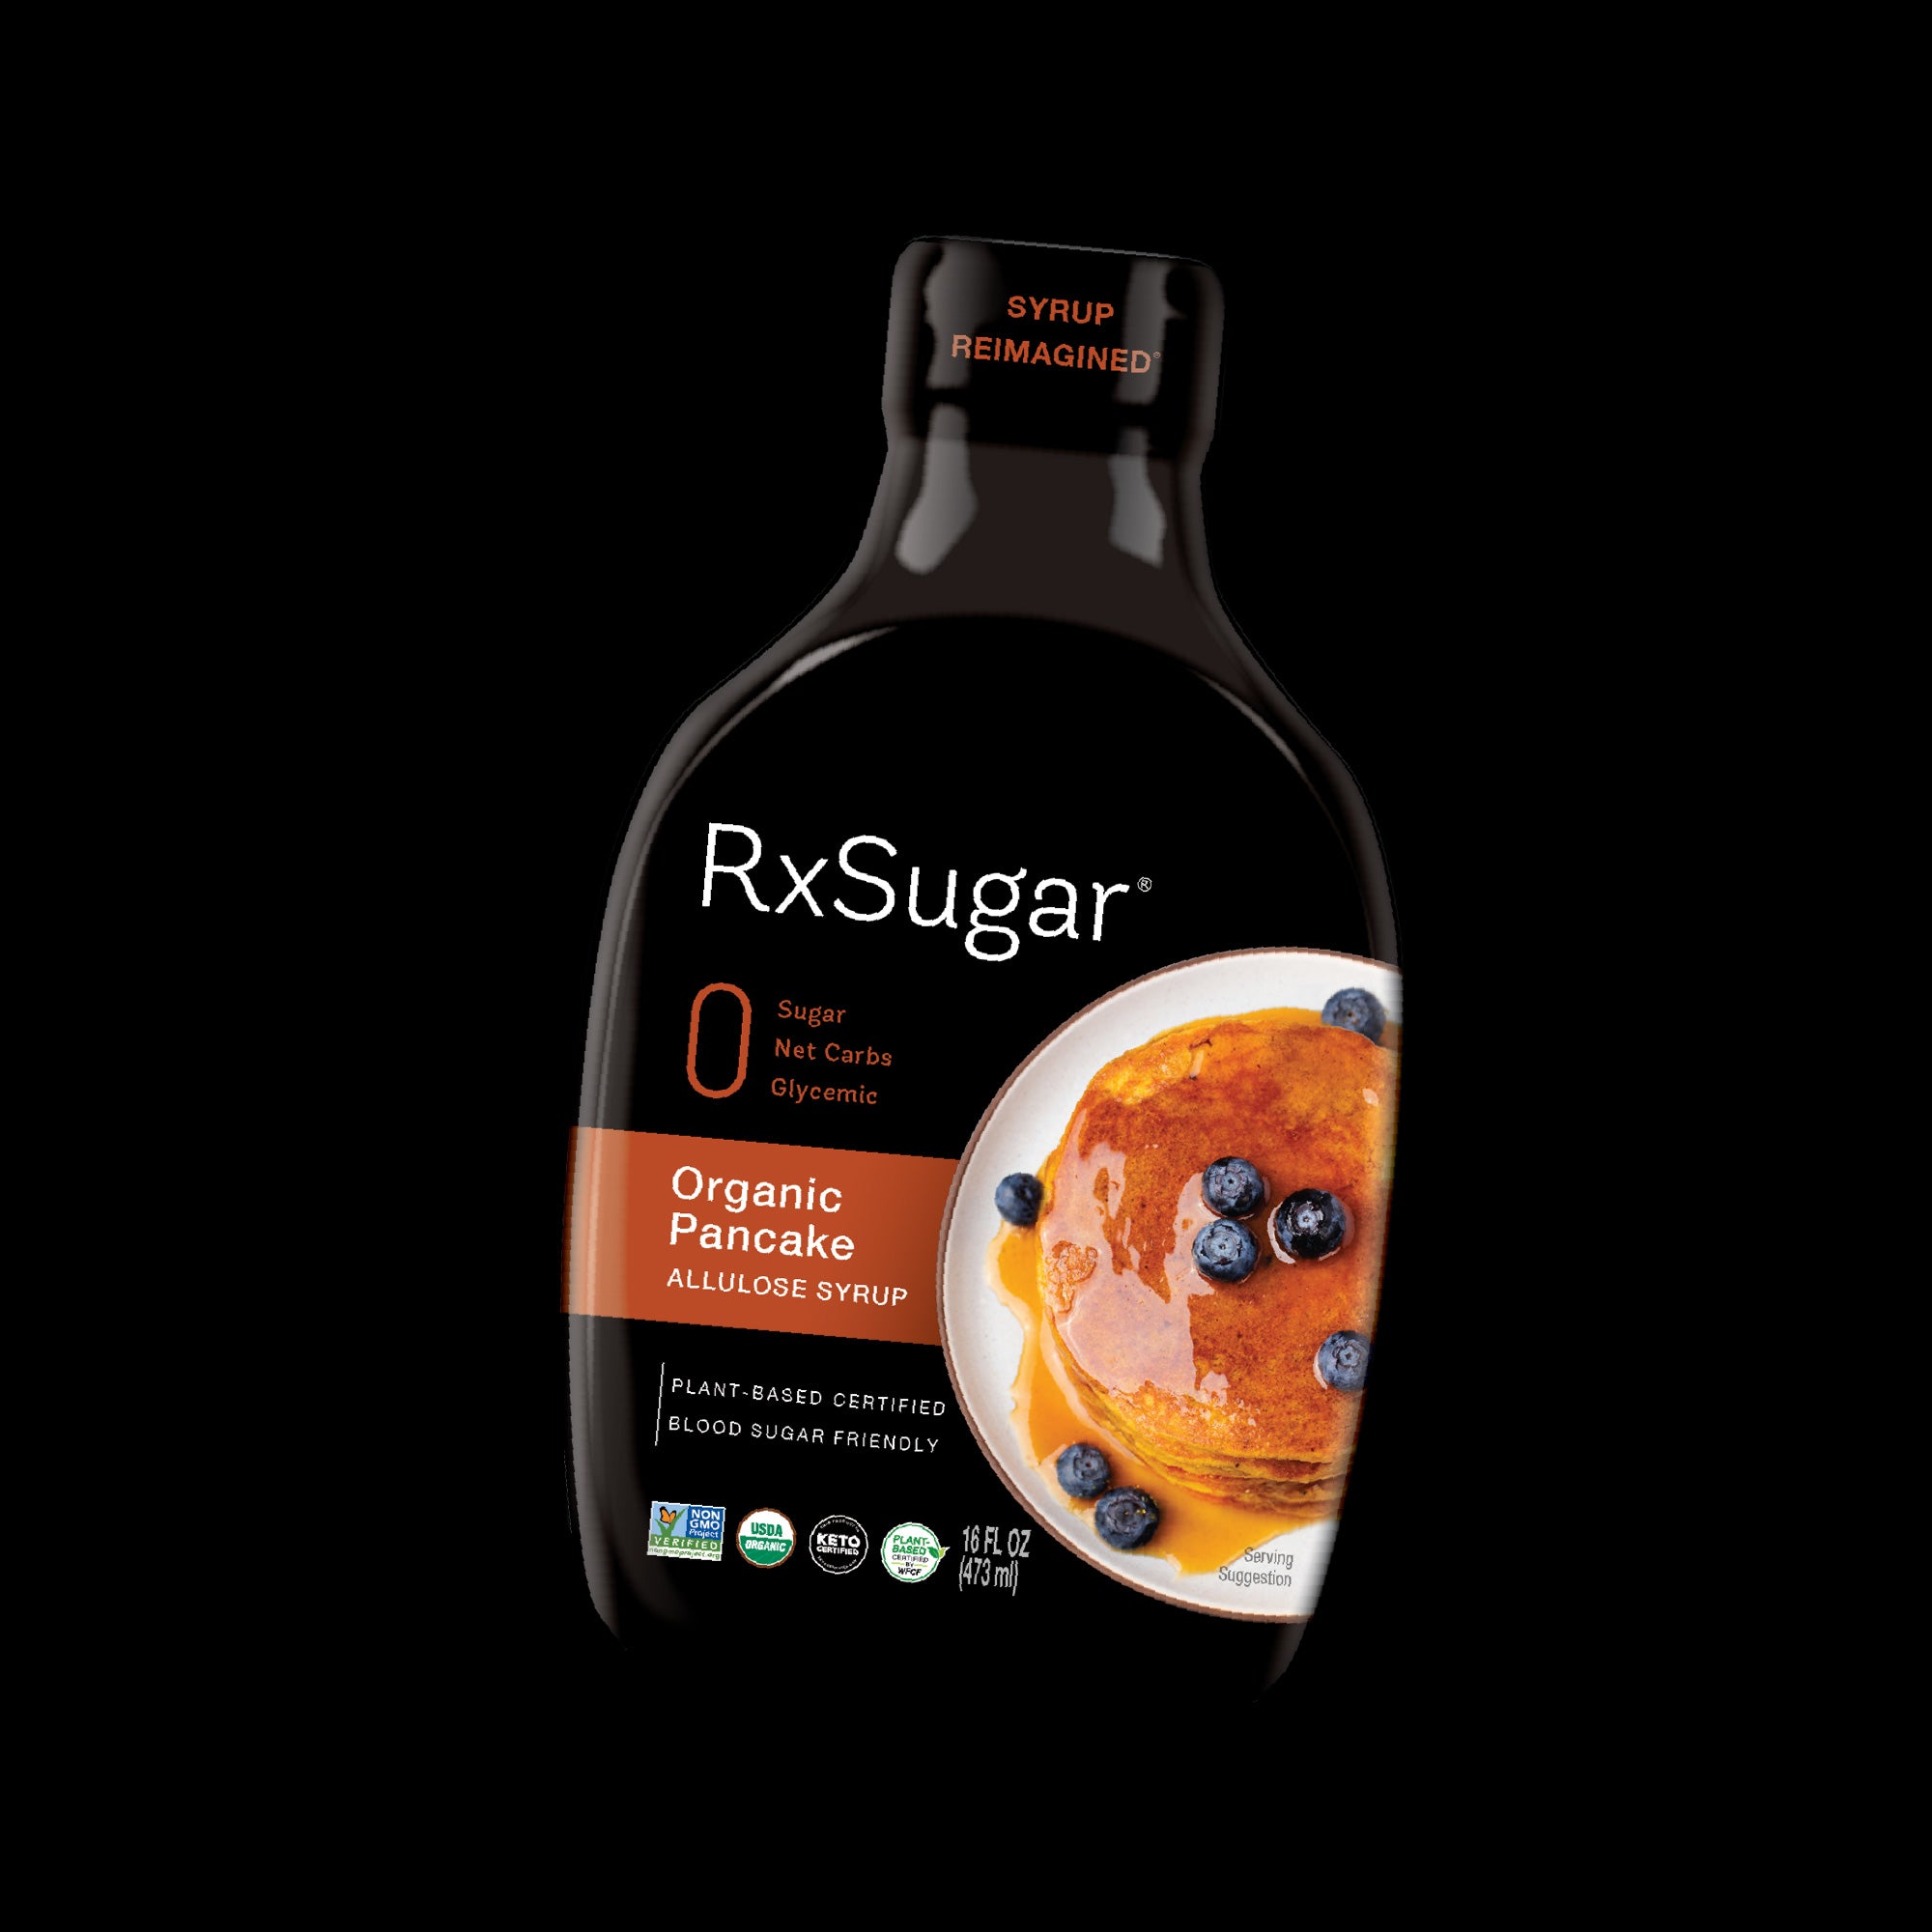 RxSugar Organic Pancake Maple flavored Syrup Bottle